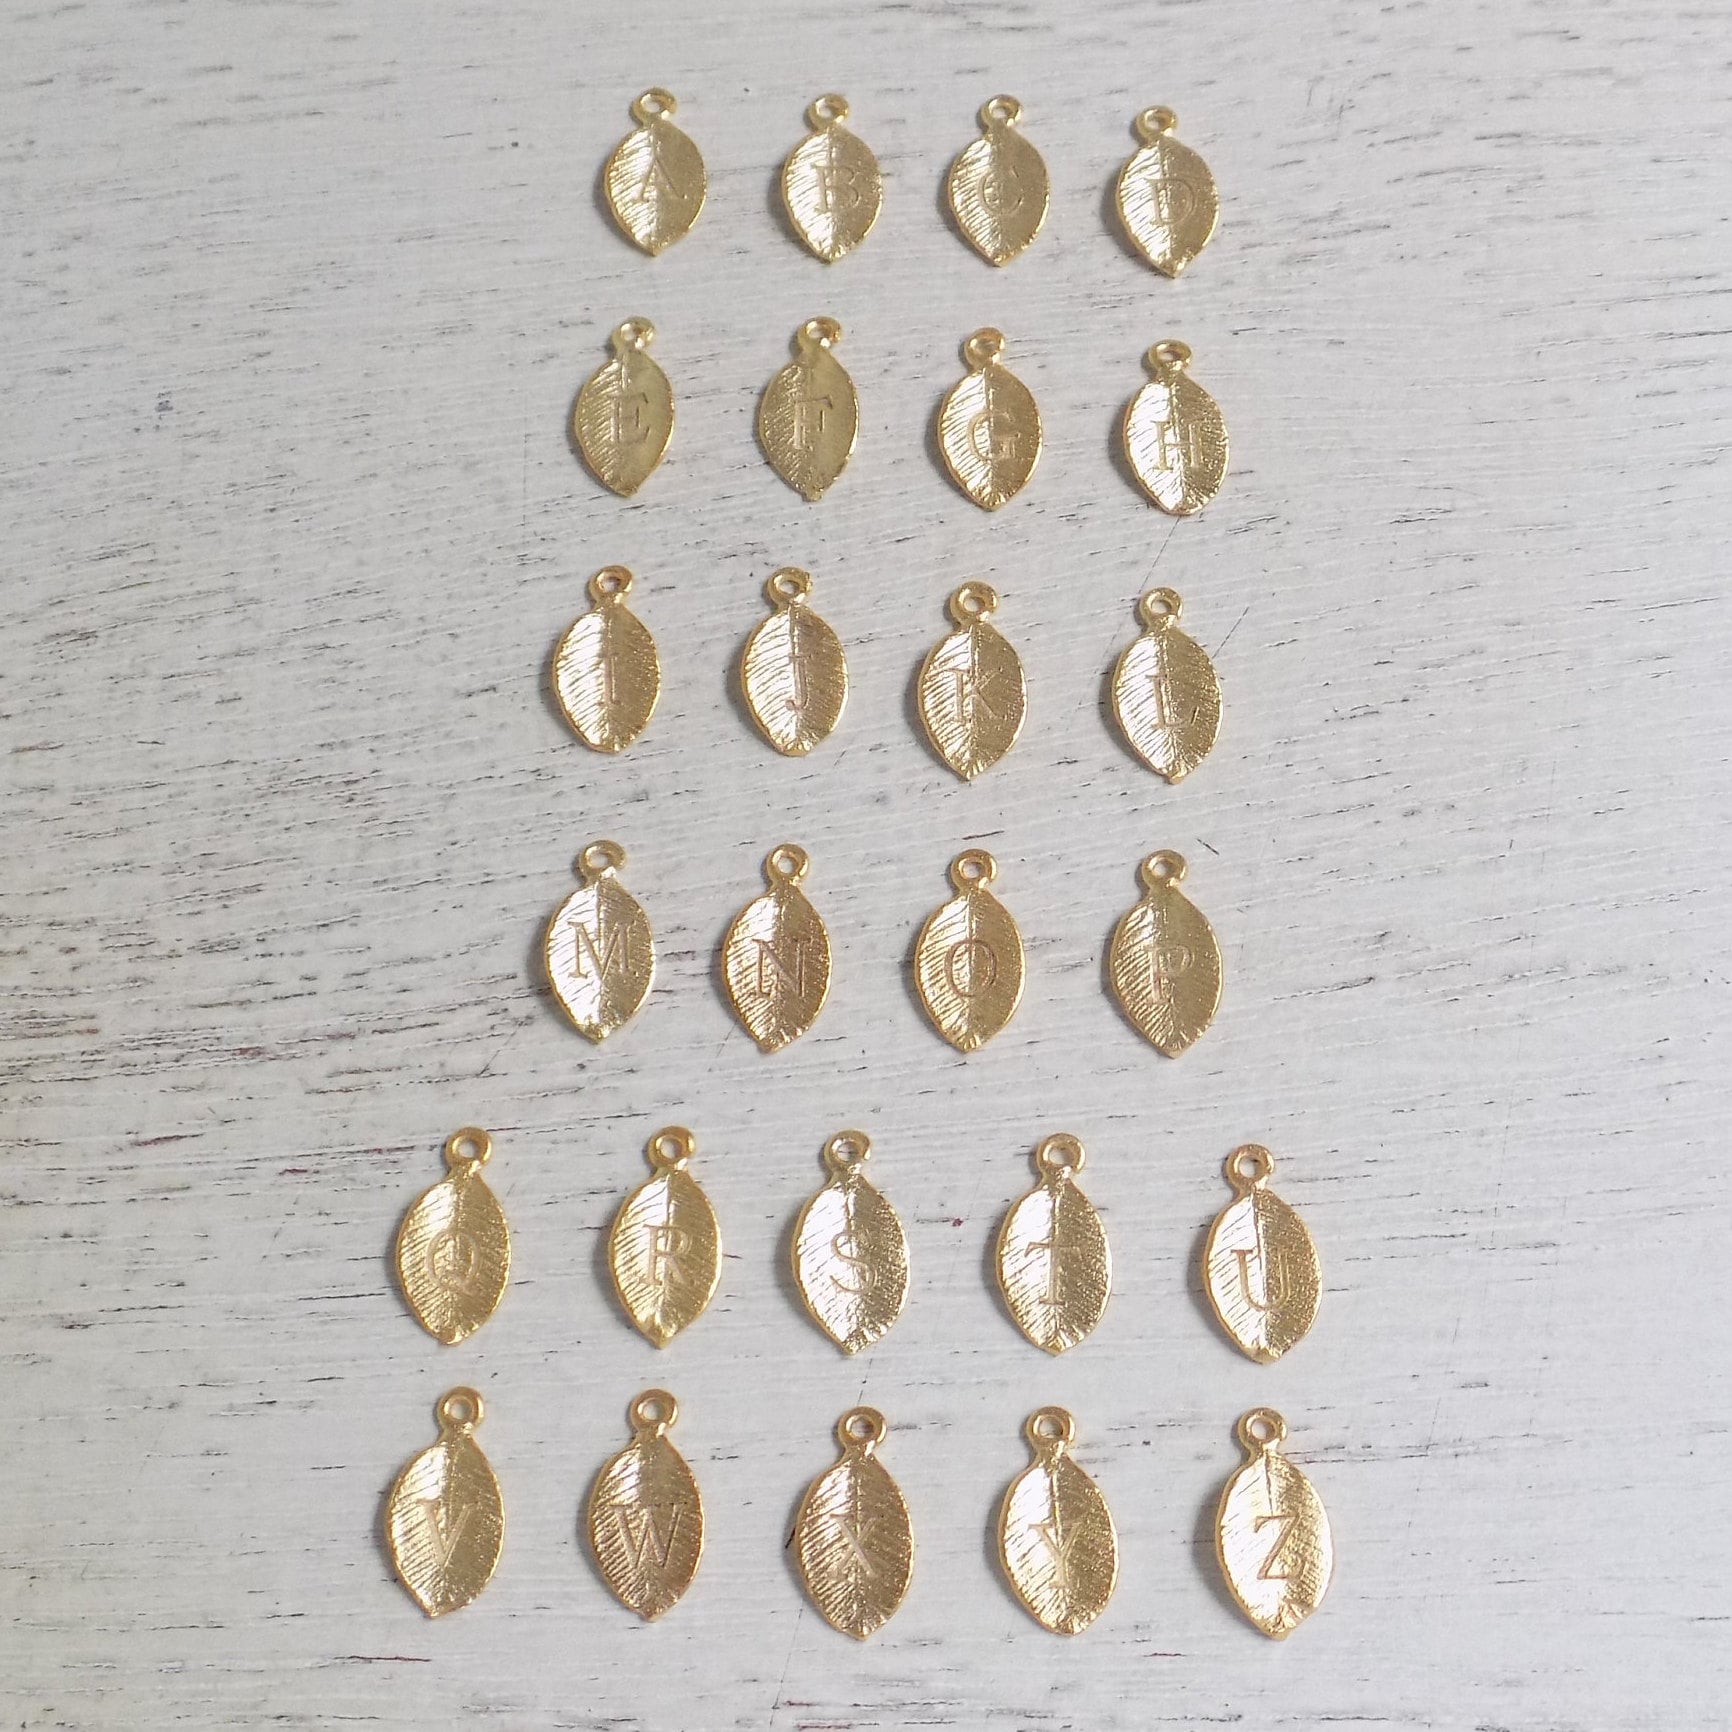 Unique Druzy Necklace, Personalized Druzy Pendant Drusy, Natural Gemstone Necklaces Long Boho, Christmas Gift Women, R14-33